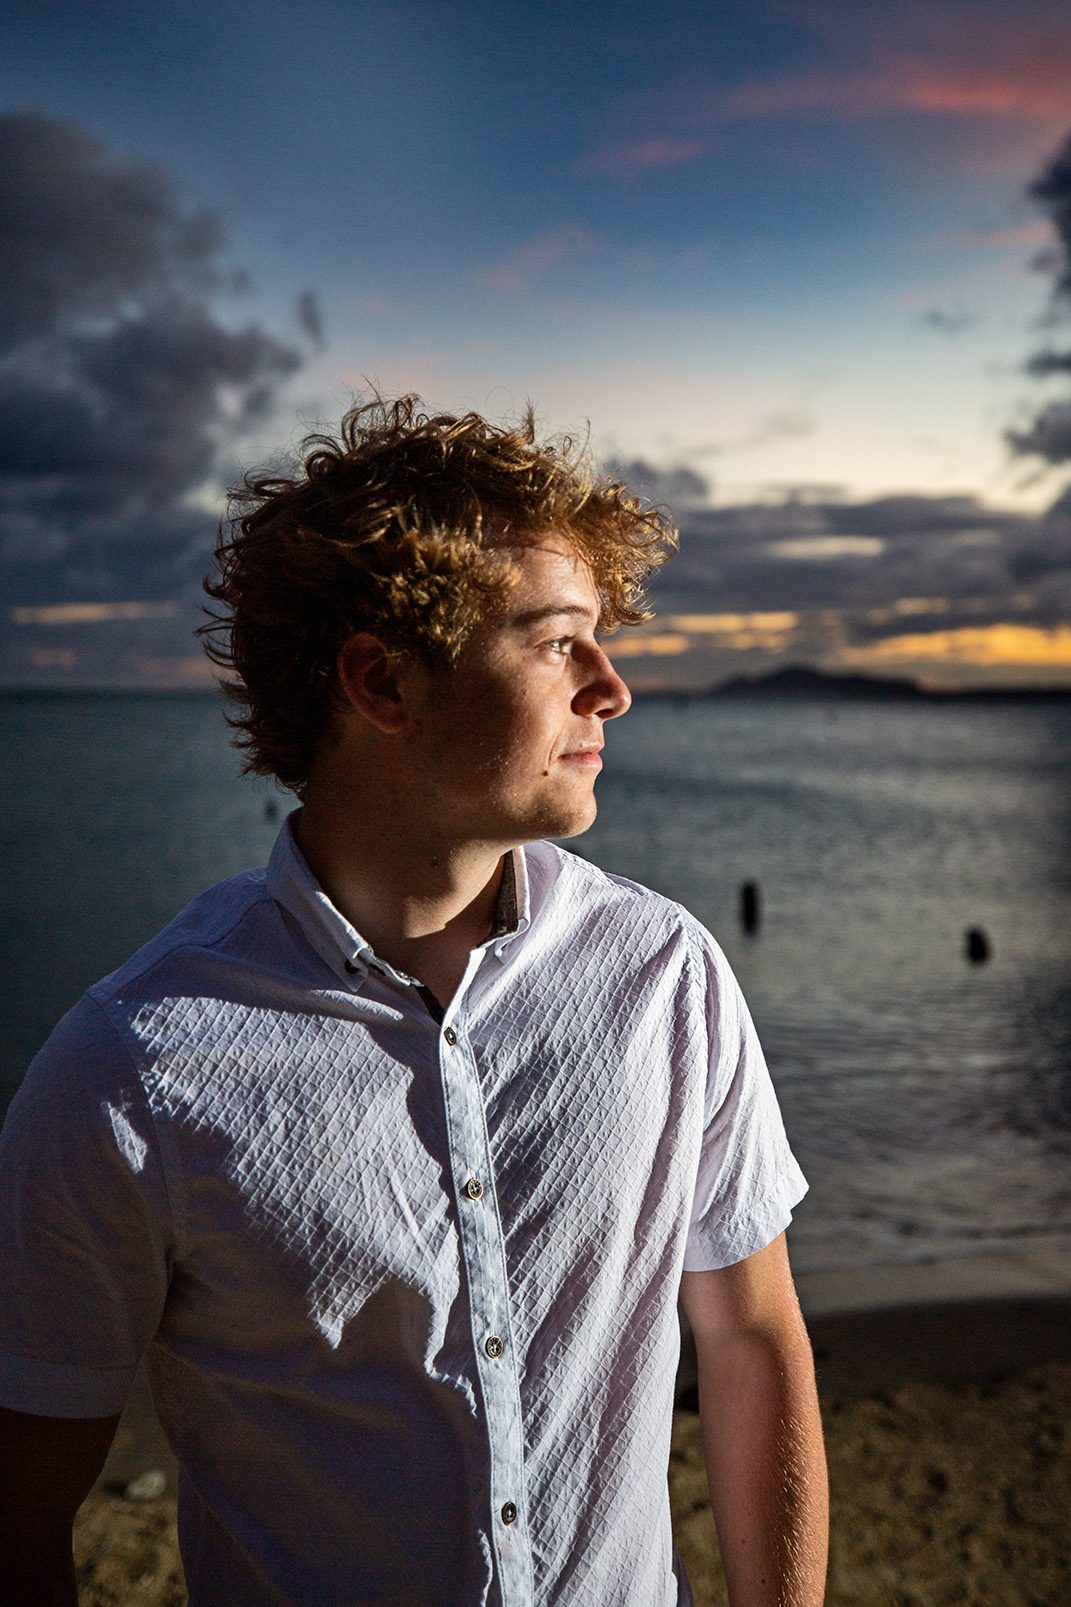 boy senior portrait on beach in Hawaii at sunset